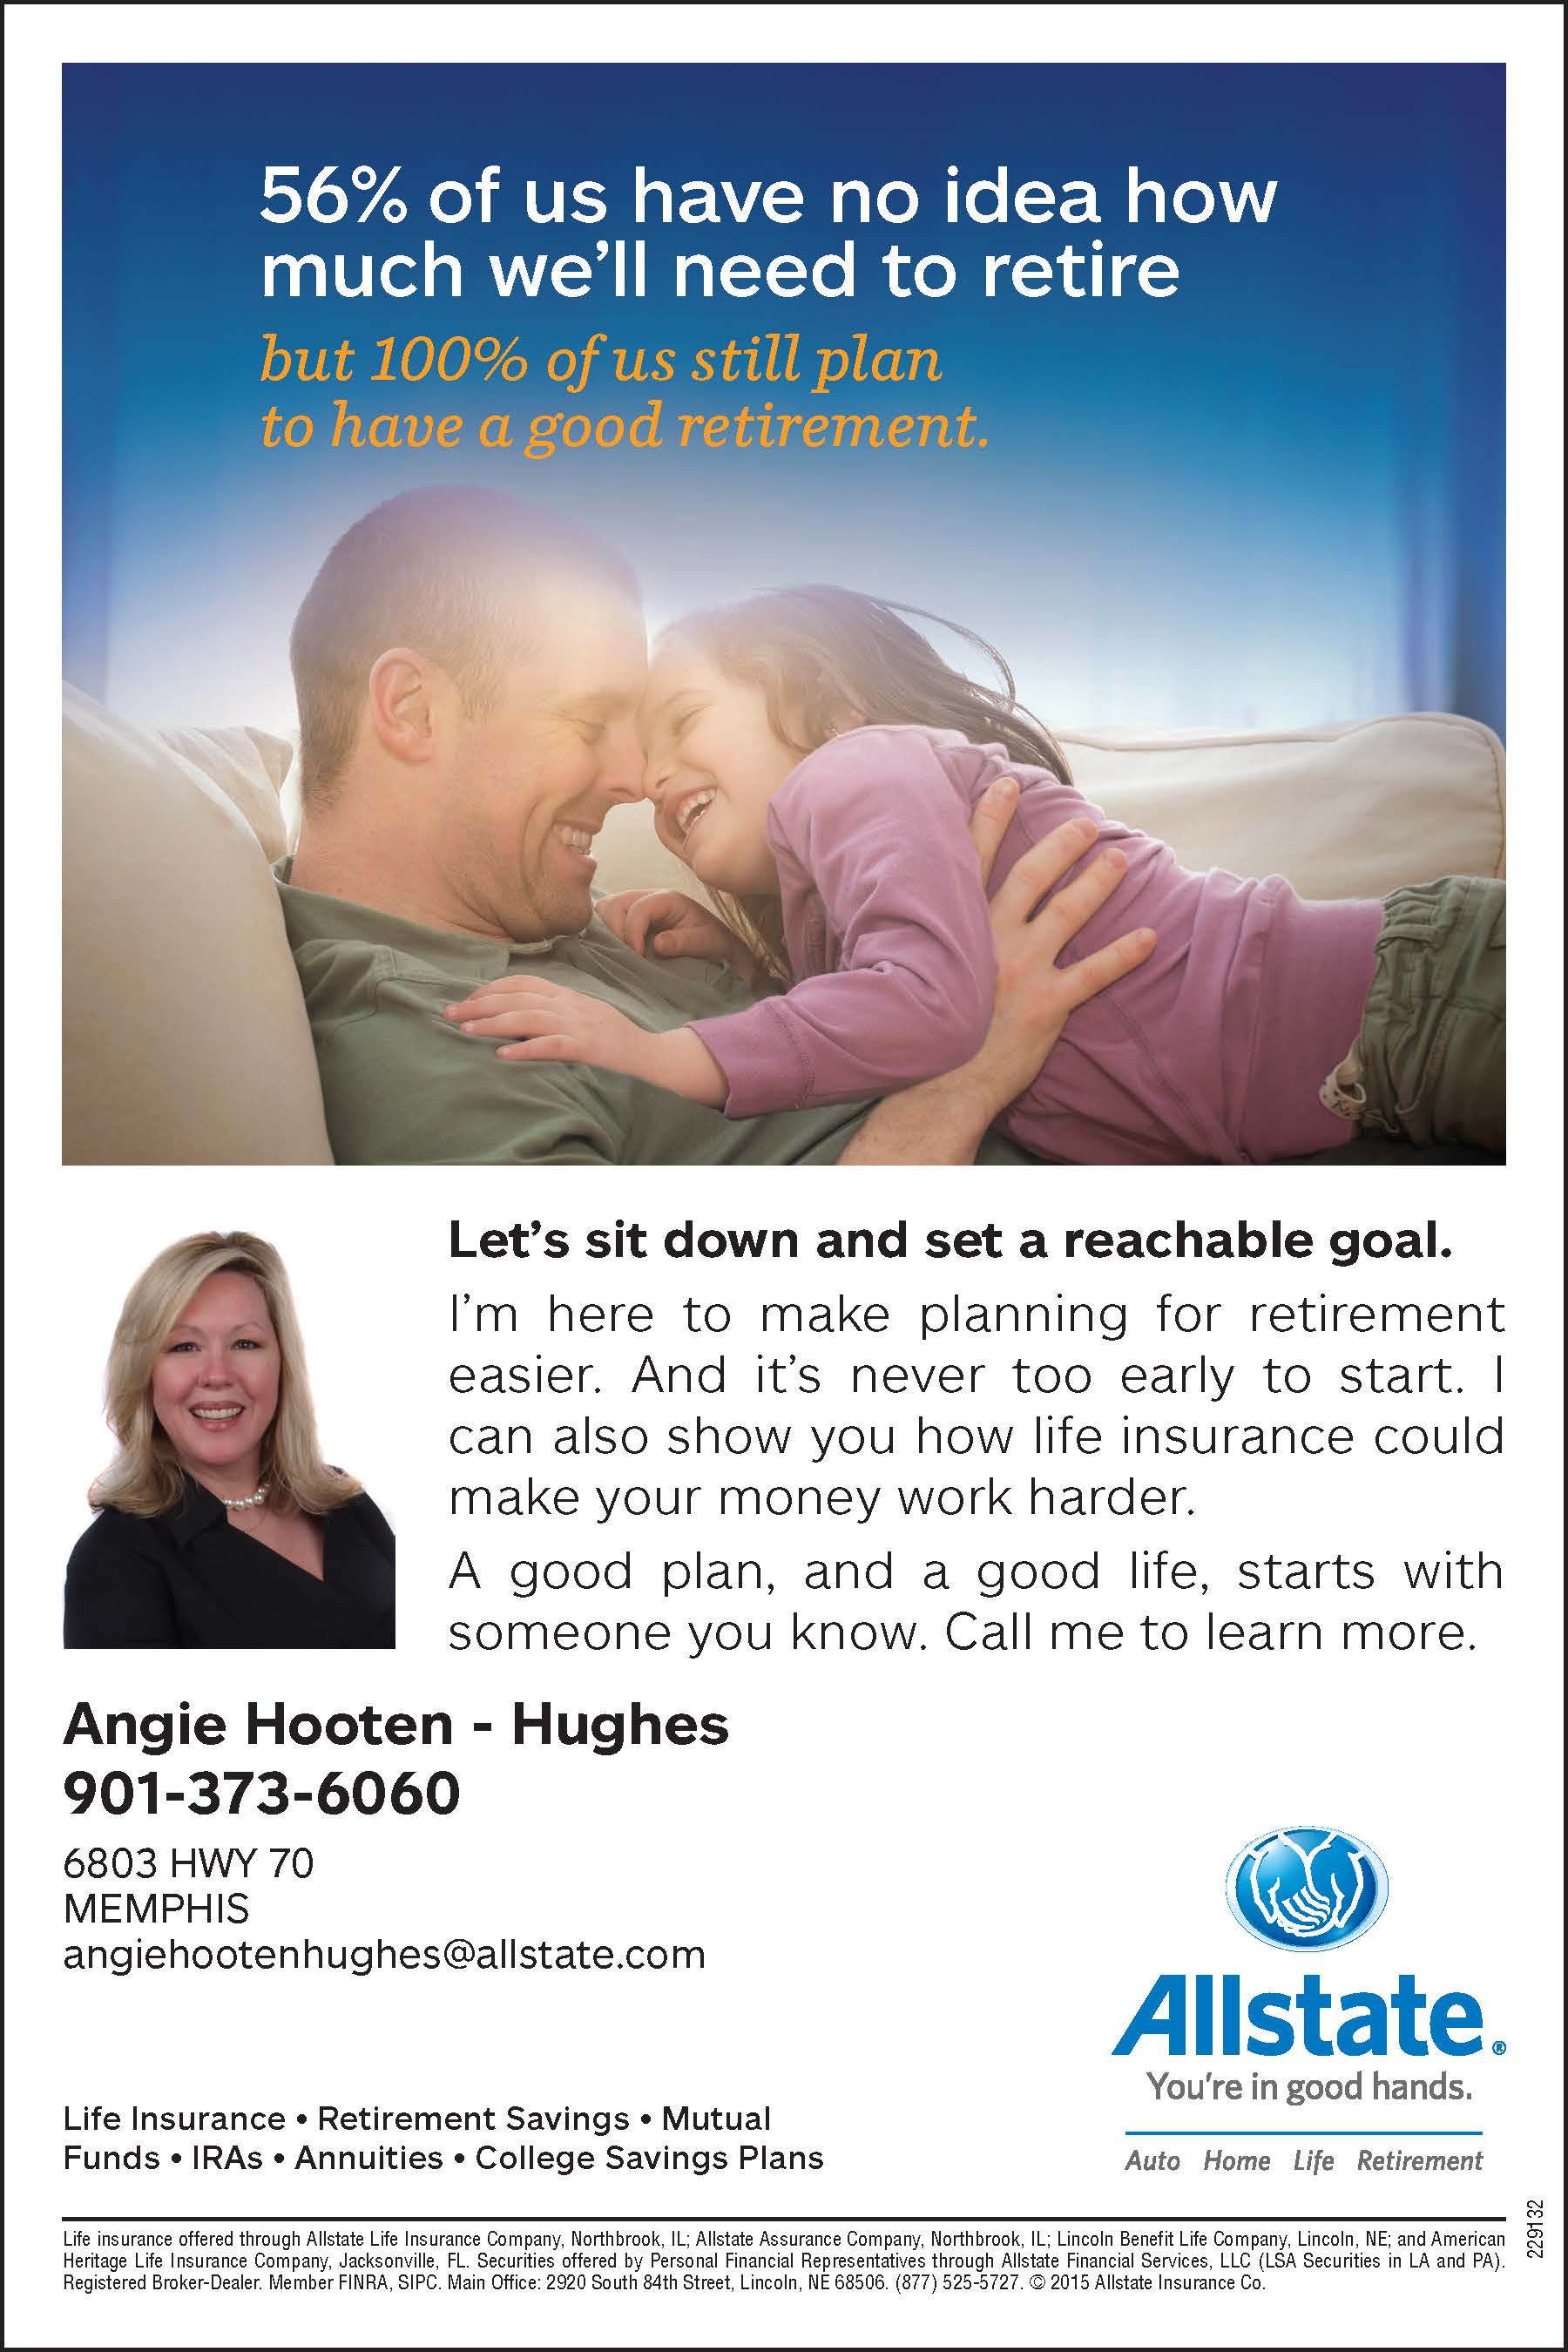 Angie Hooten-Hughes: Allstate Insurance Photo